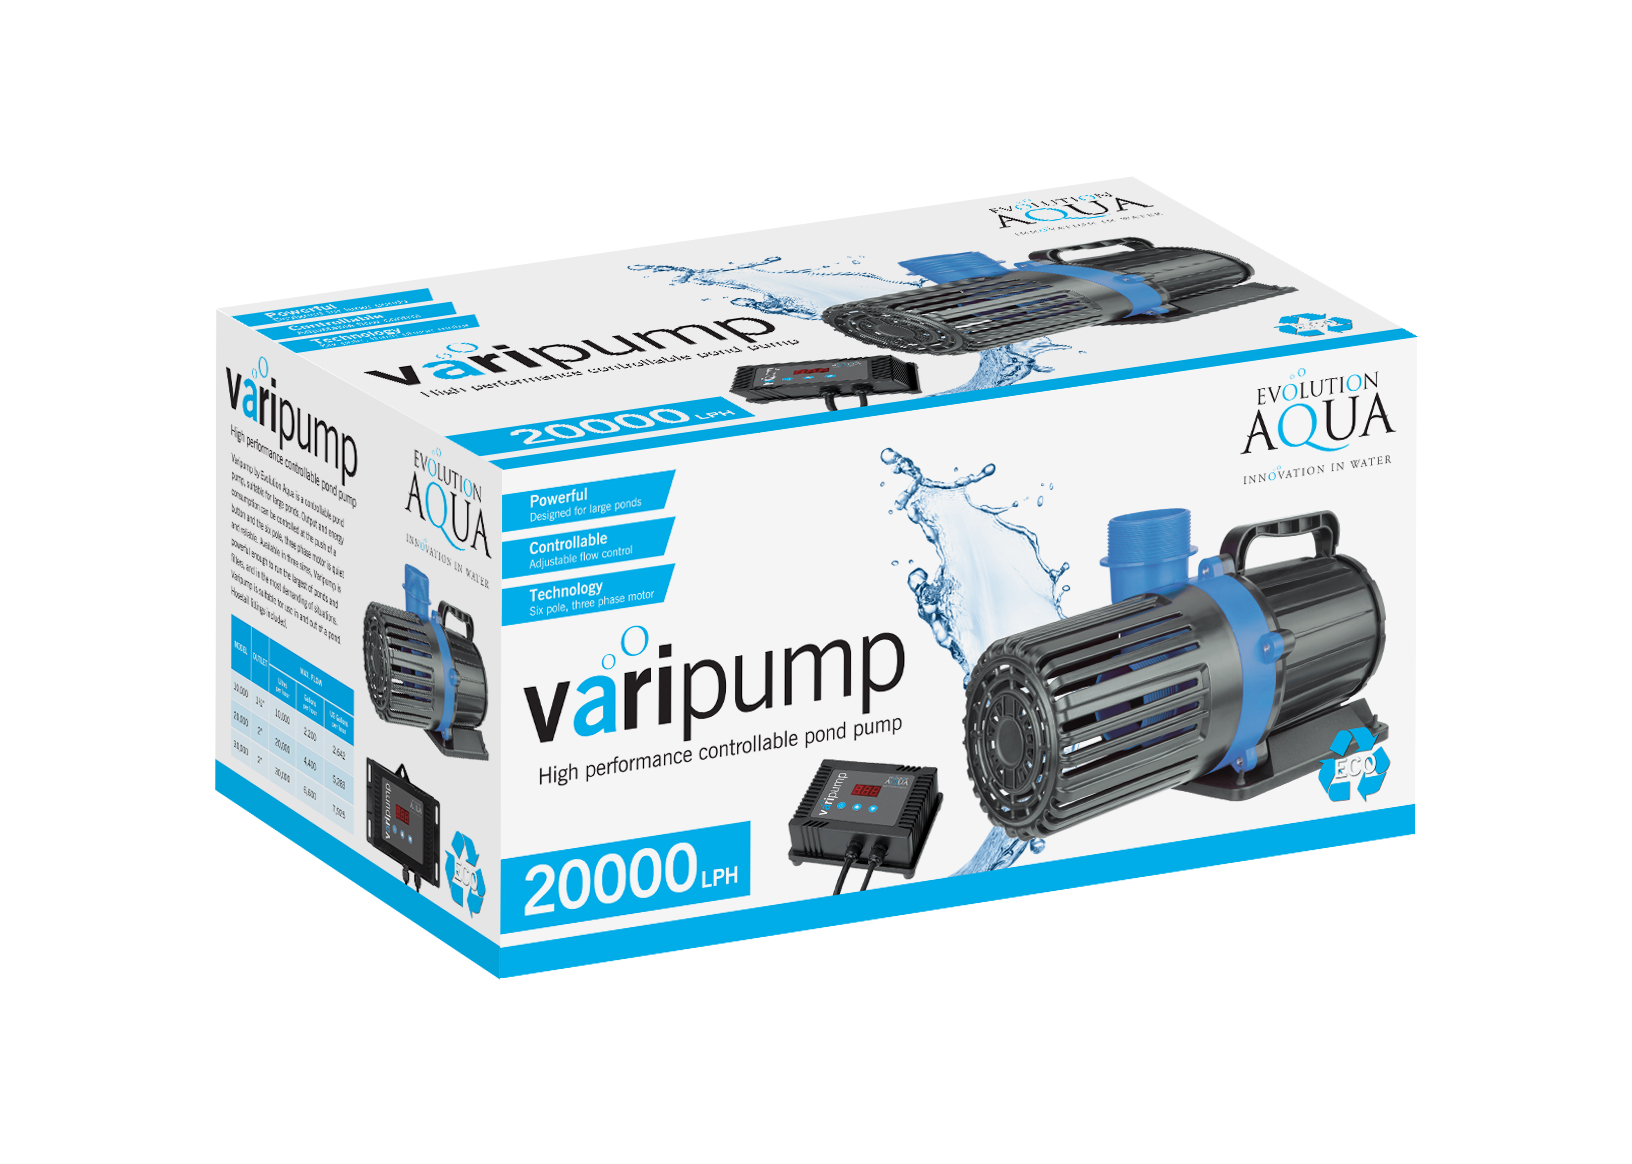 Evolution Aqua launch new controllable pond pumps 